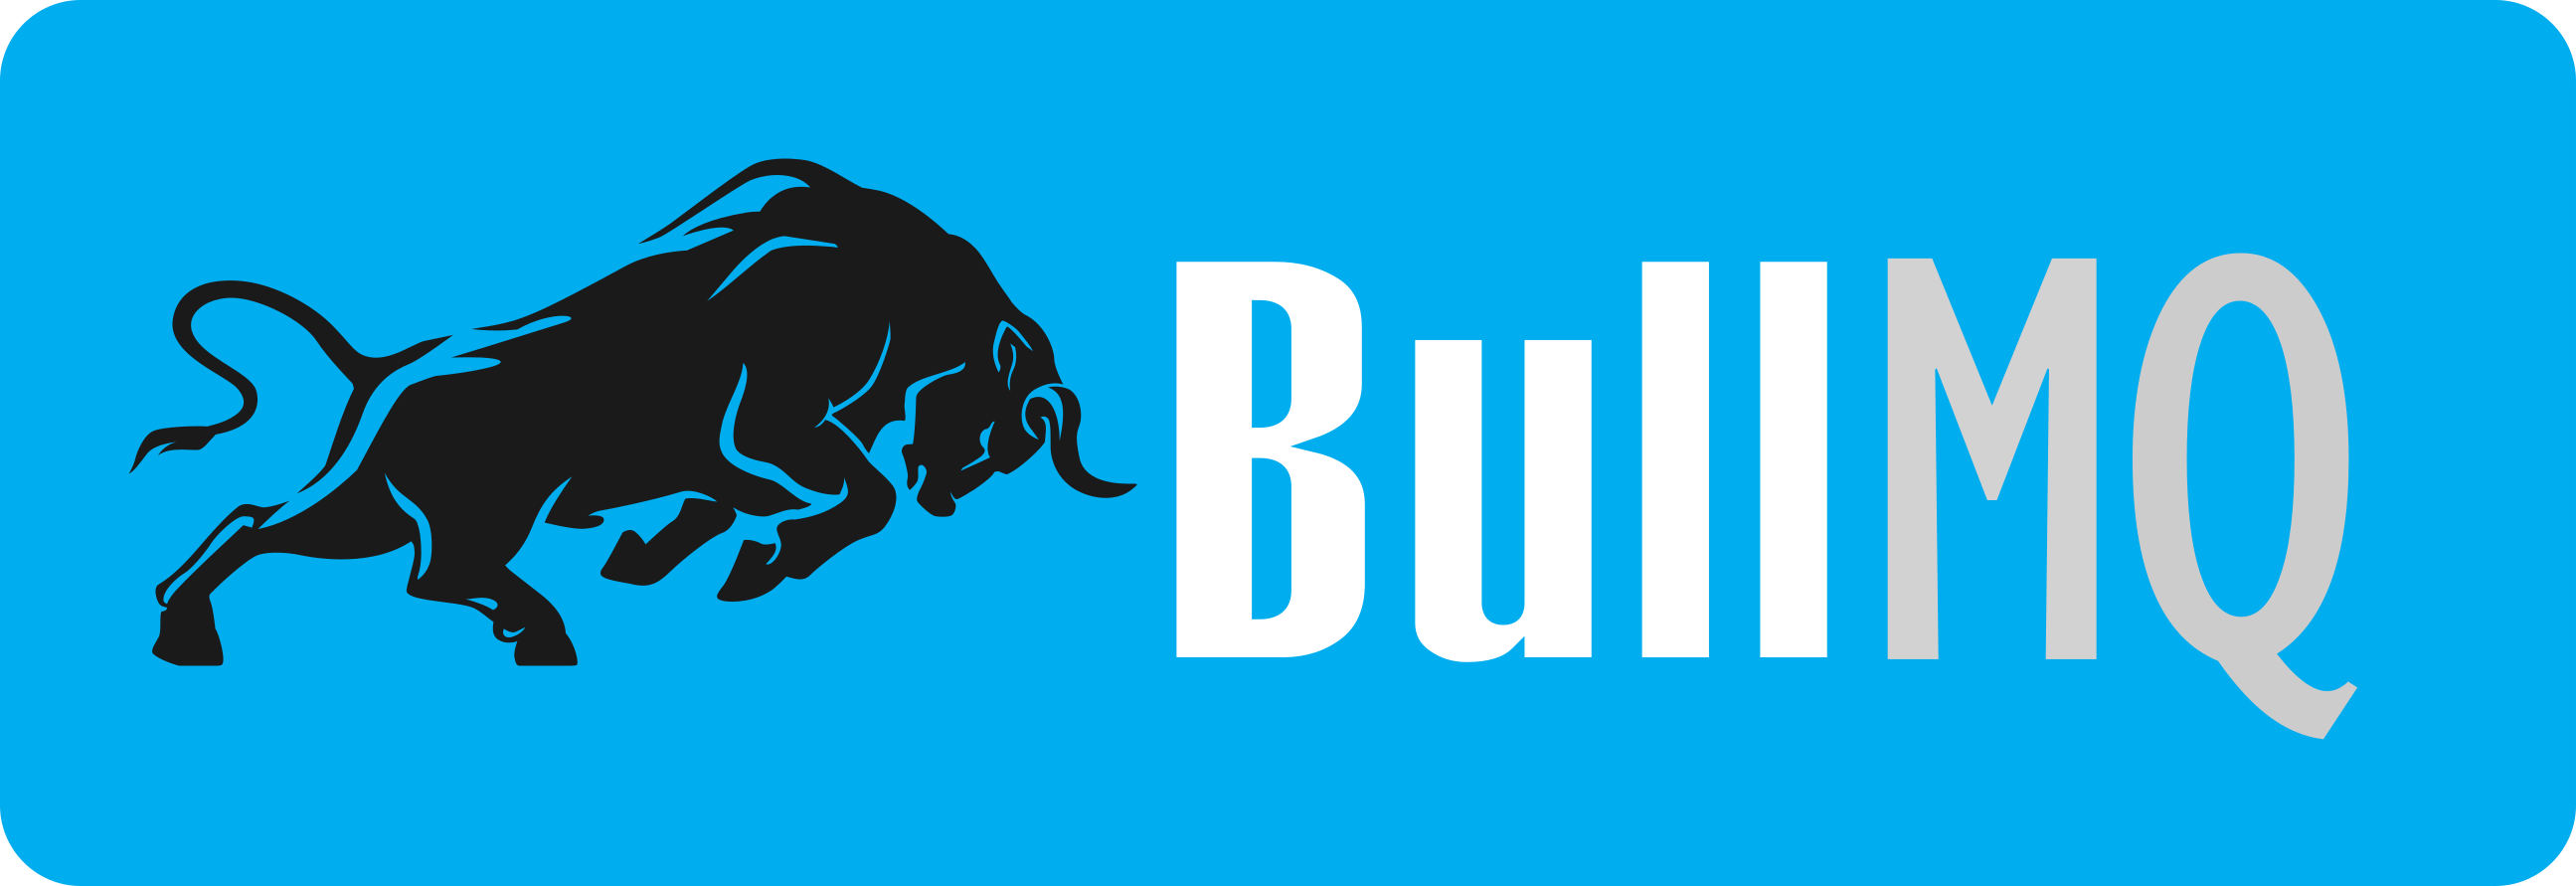 Screenshot of BullMQ logo